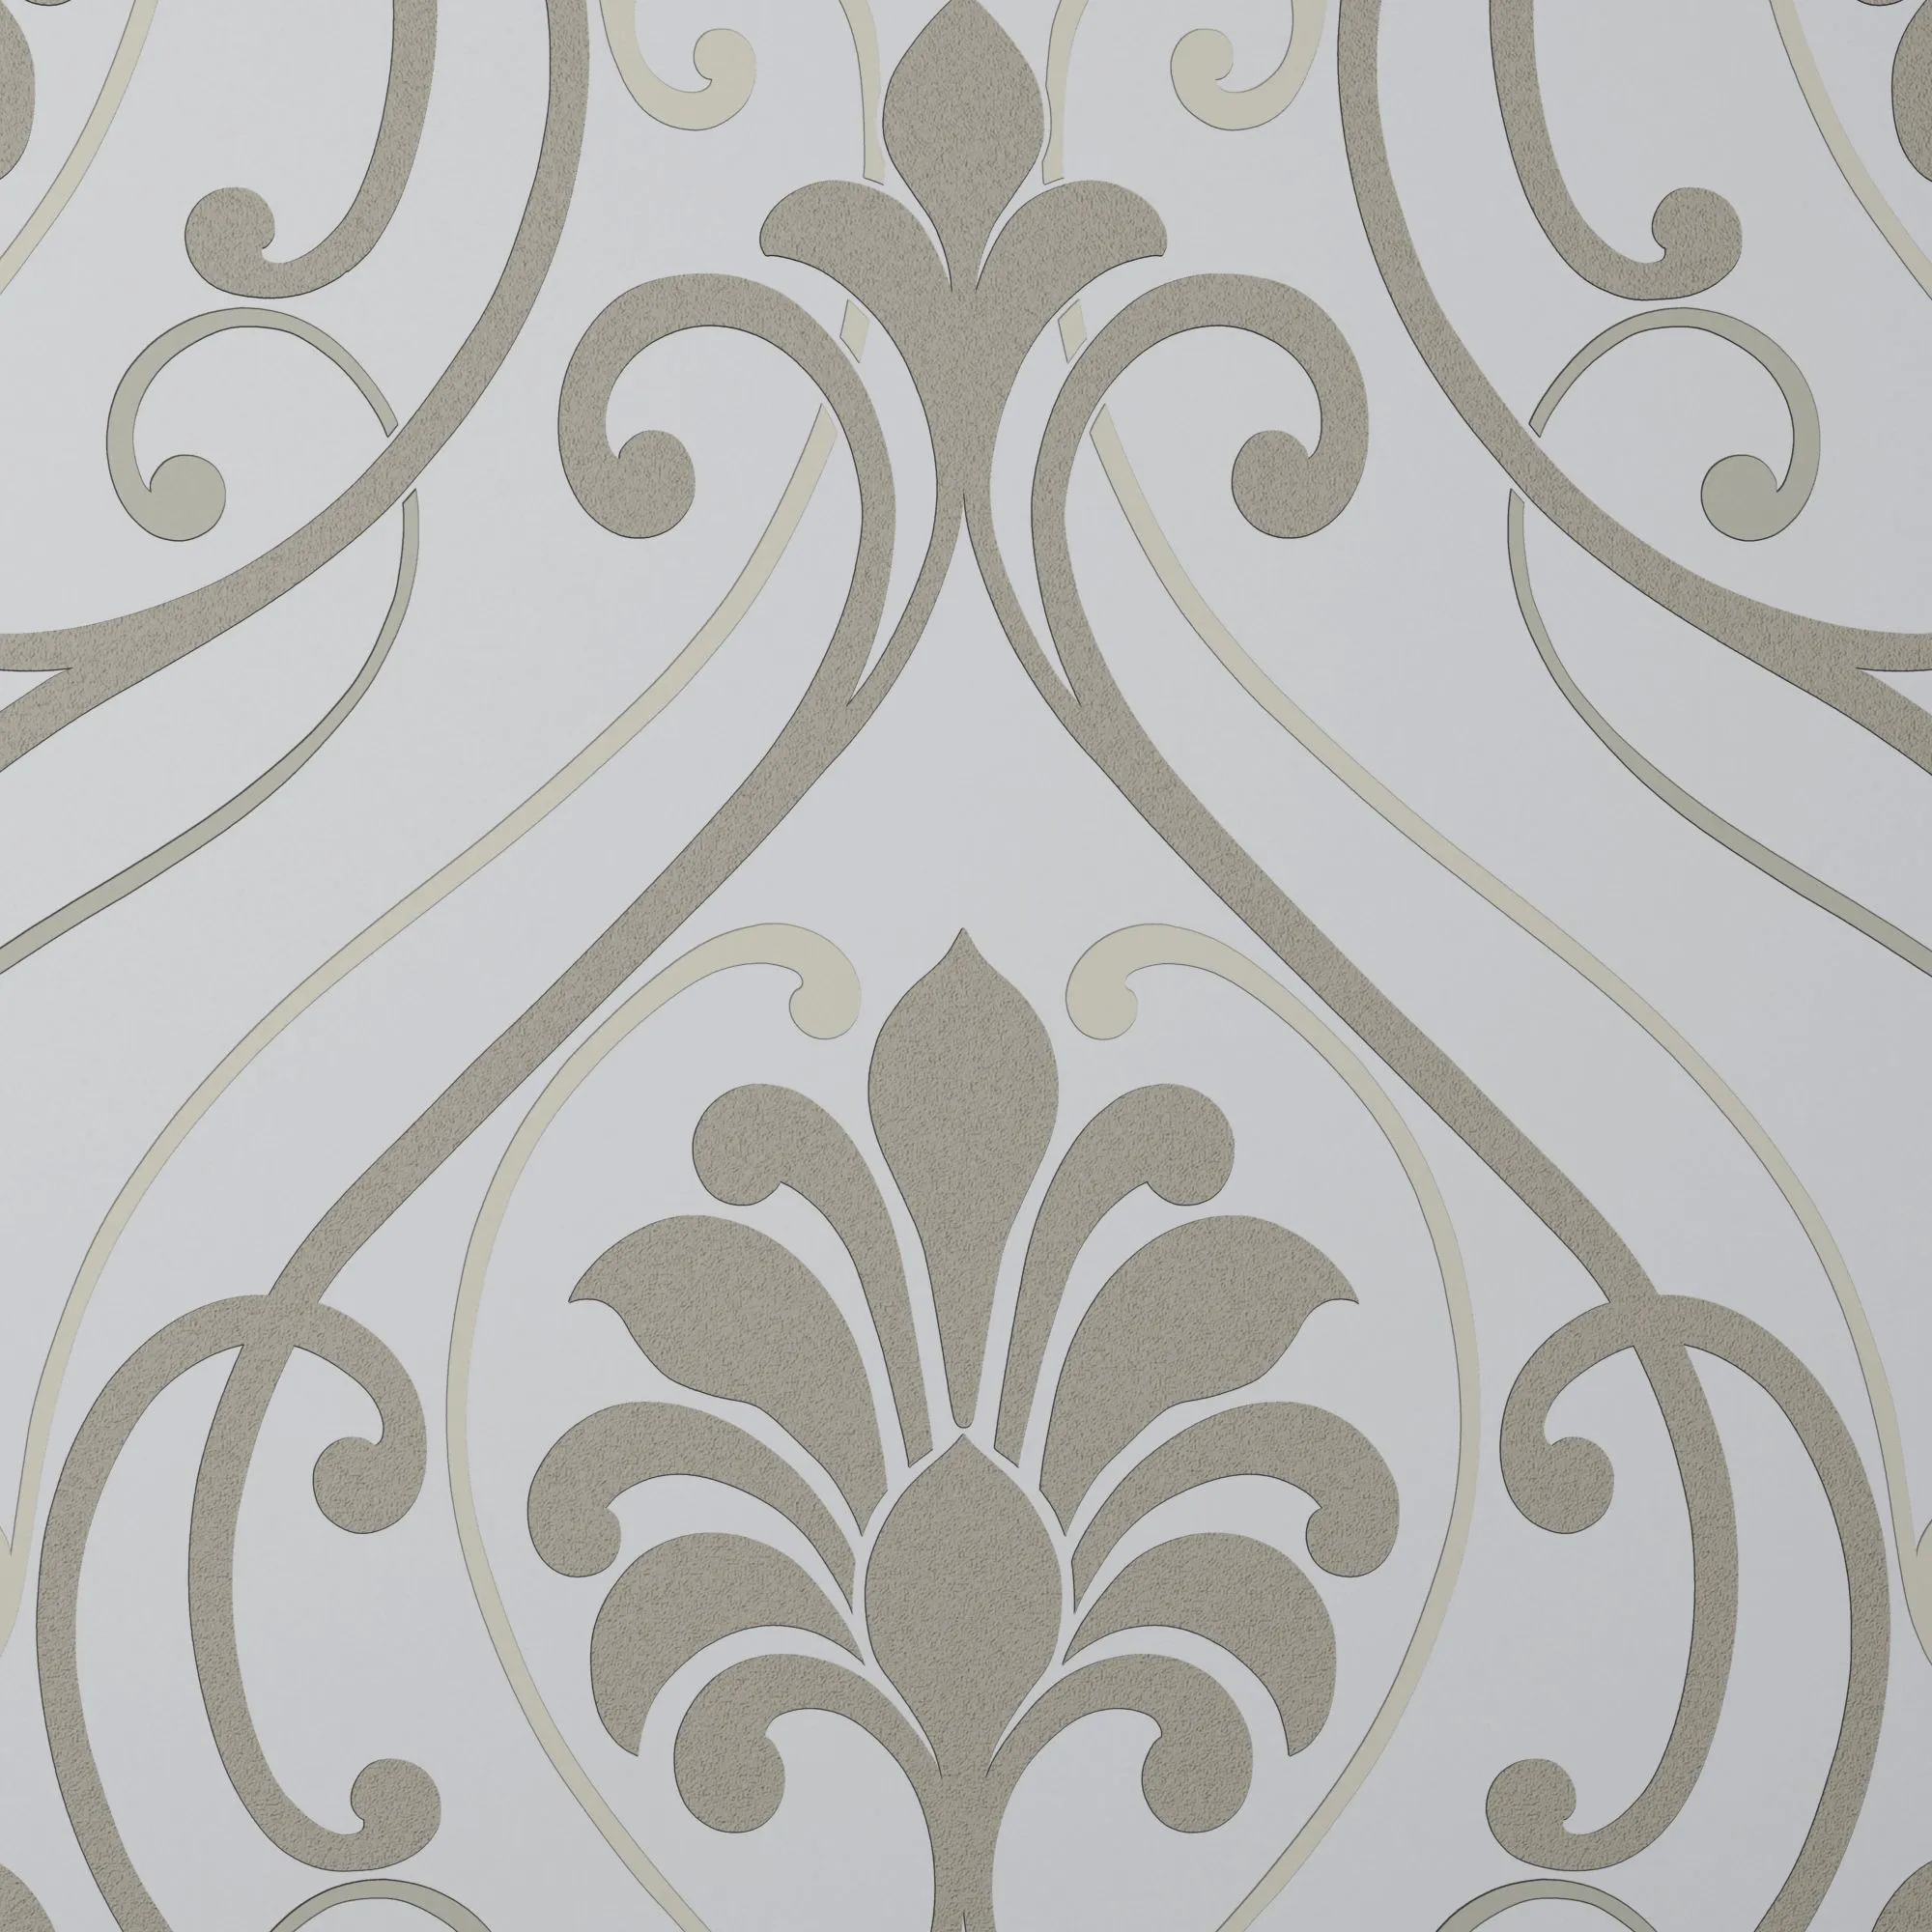 Blain Taupe & white Damask Glitter & mica effect Textured Wallpaper